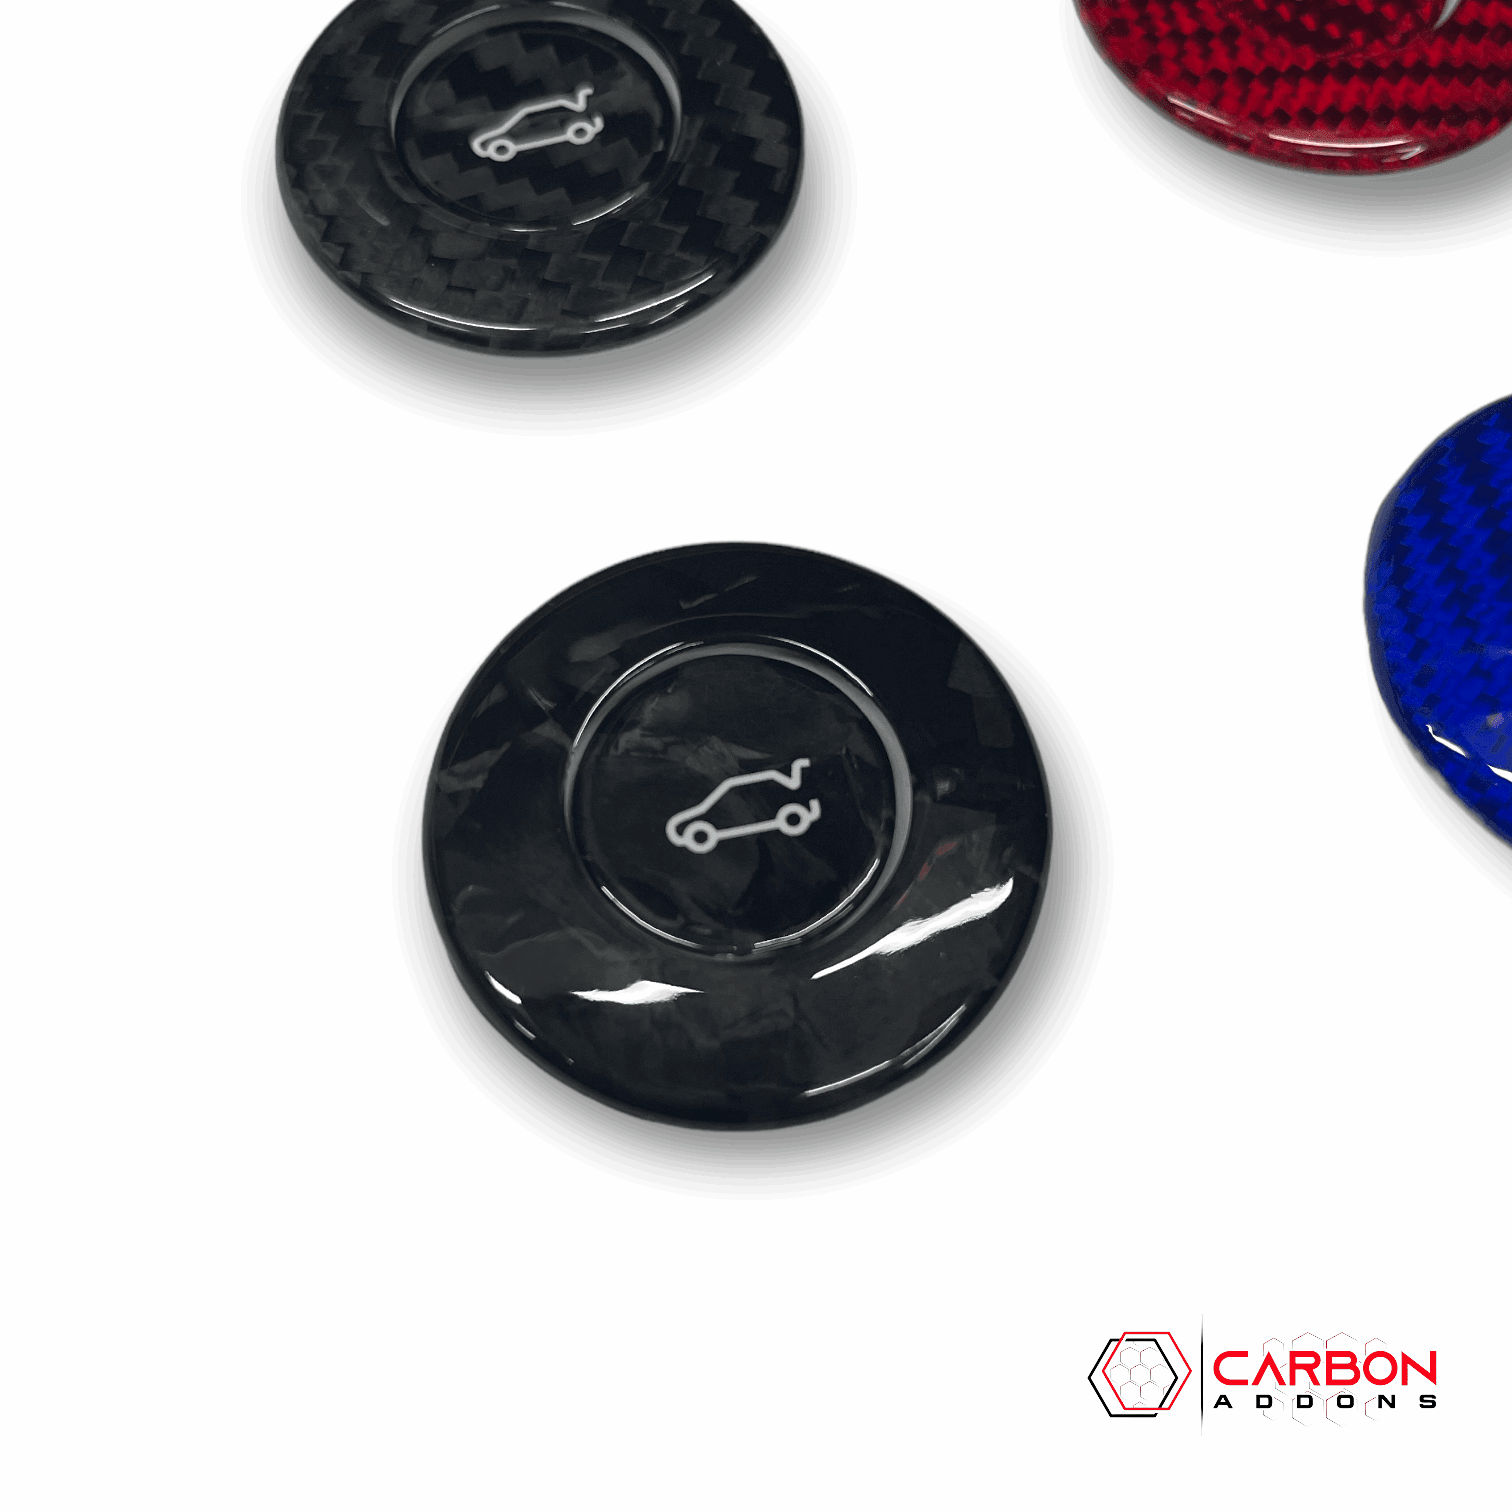 2016-2024 Camaros Carbon Fiber Trunk Release Button Cover - carbonaddons Carbon Fiber Parts, Accessories, Upgrades, Mods